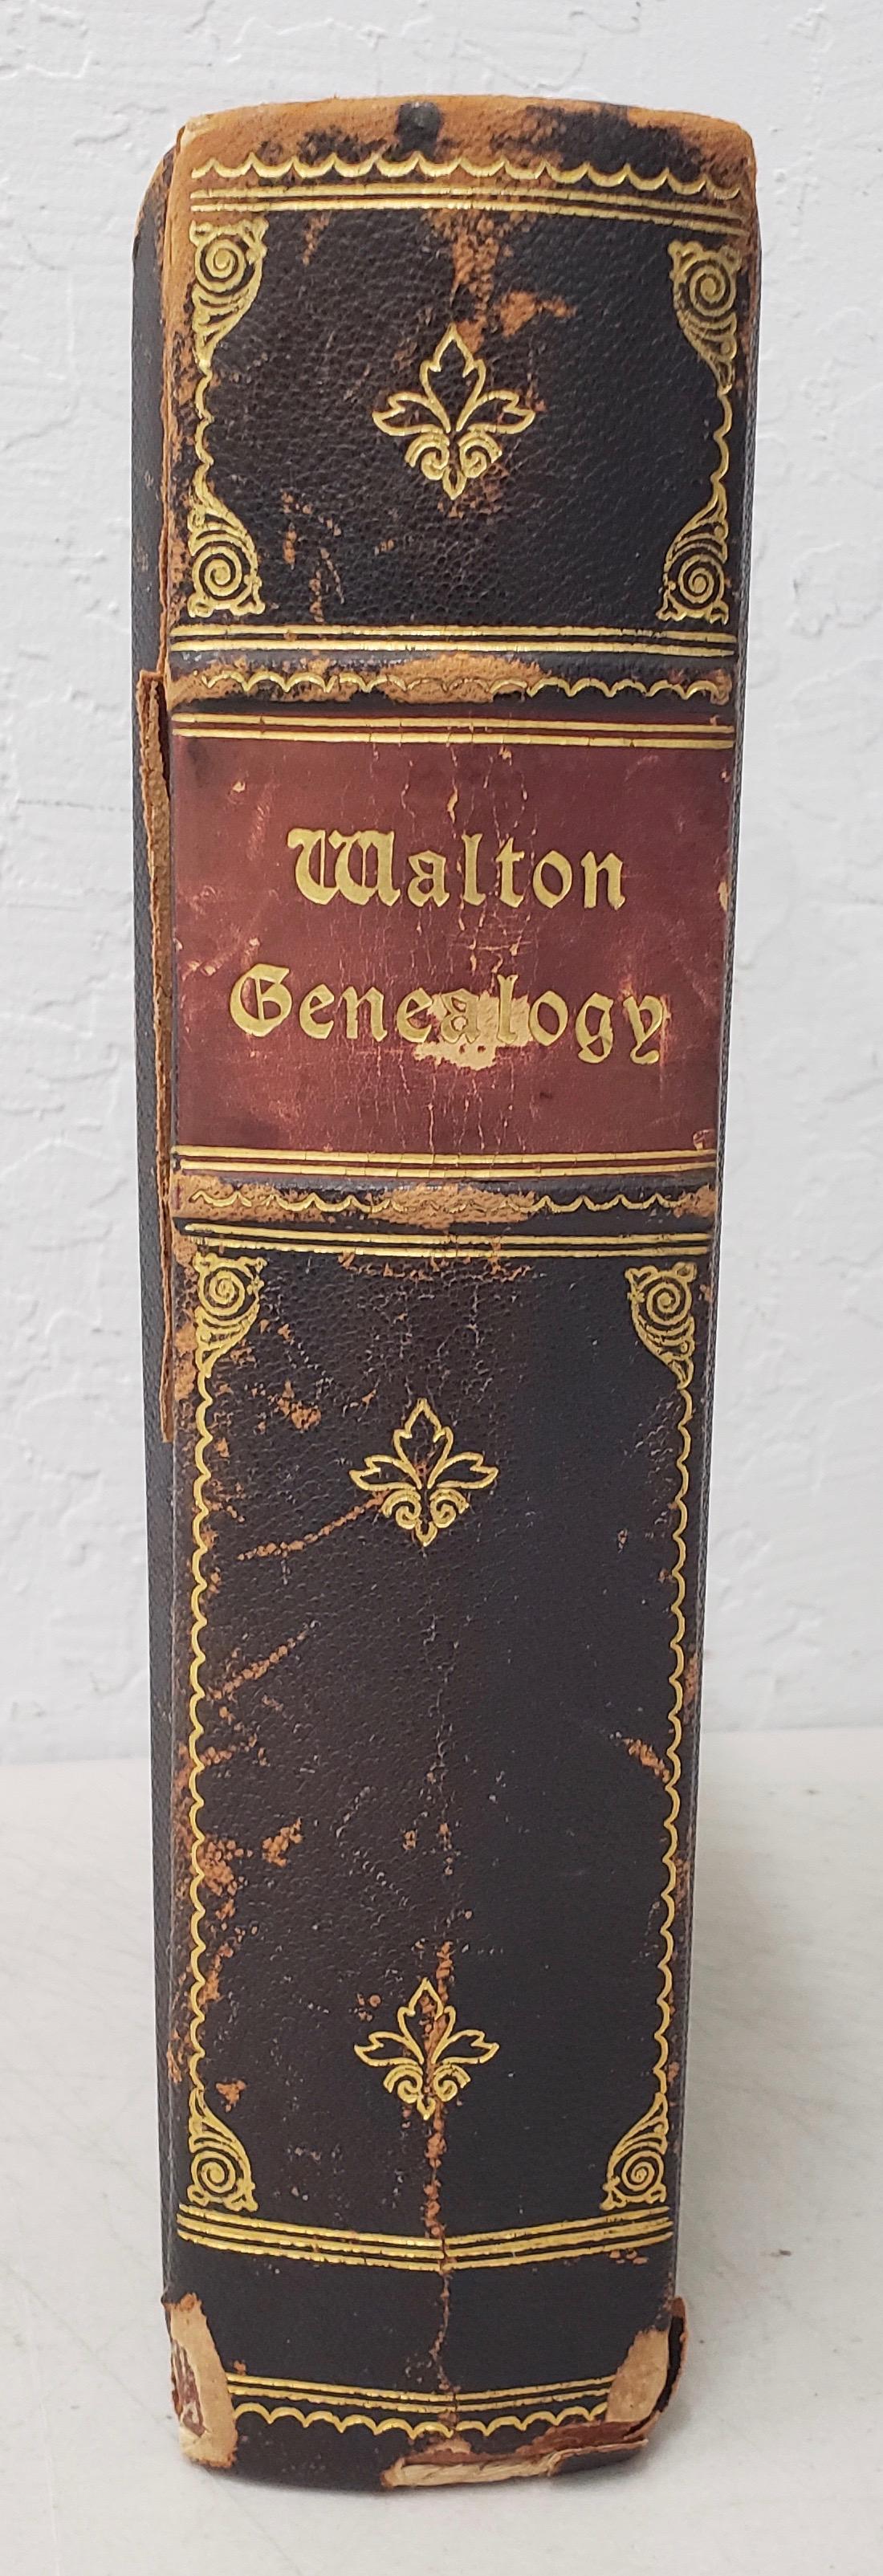 Walton Family Genealogy antique handmade book

Walton Family Genealogy 